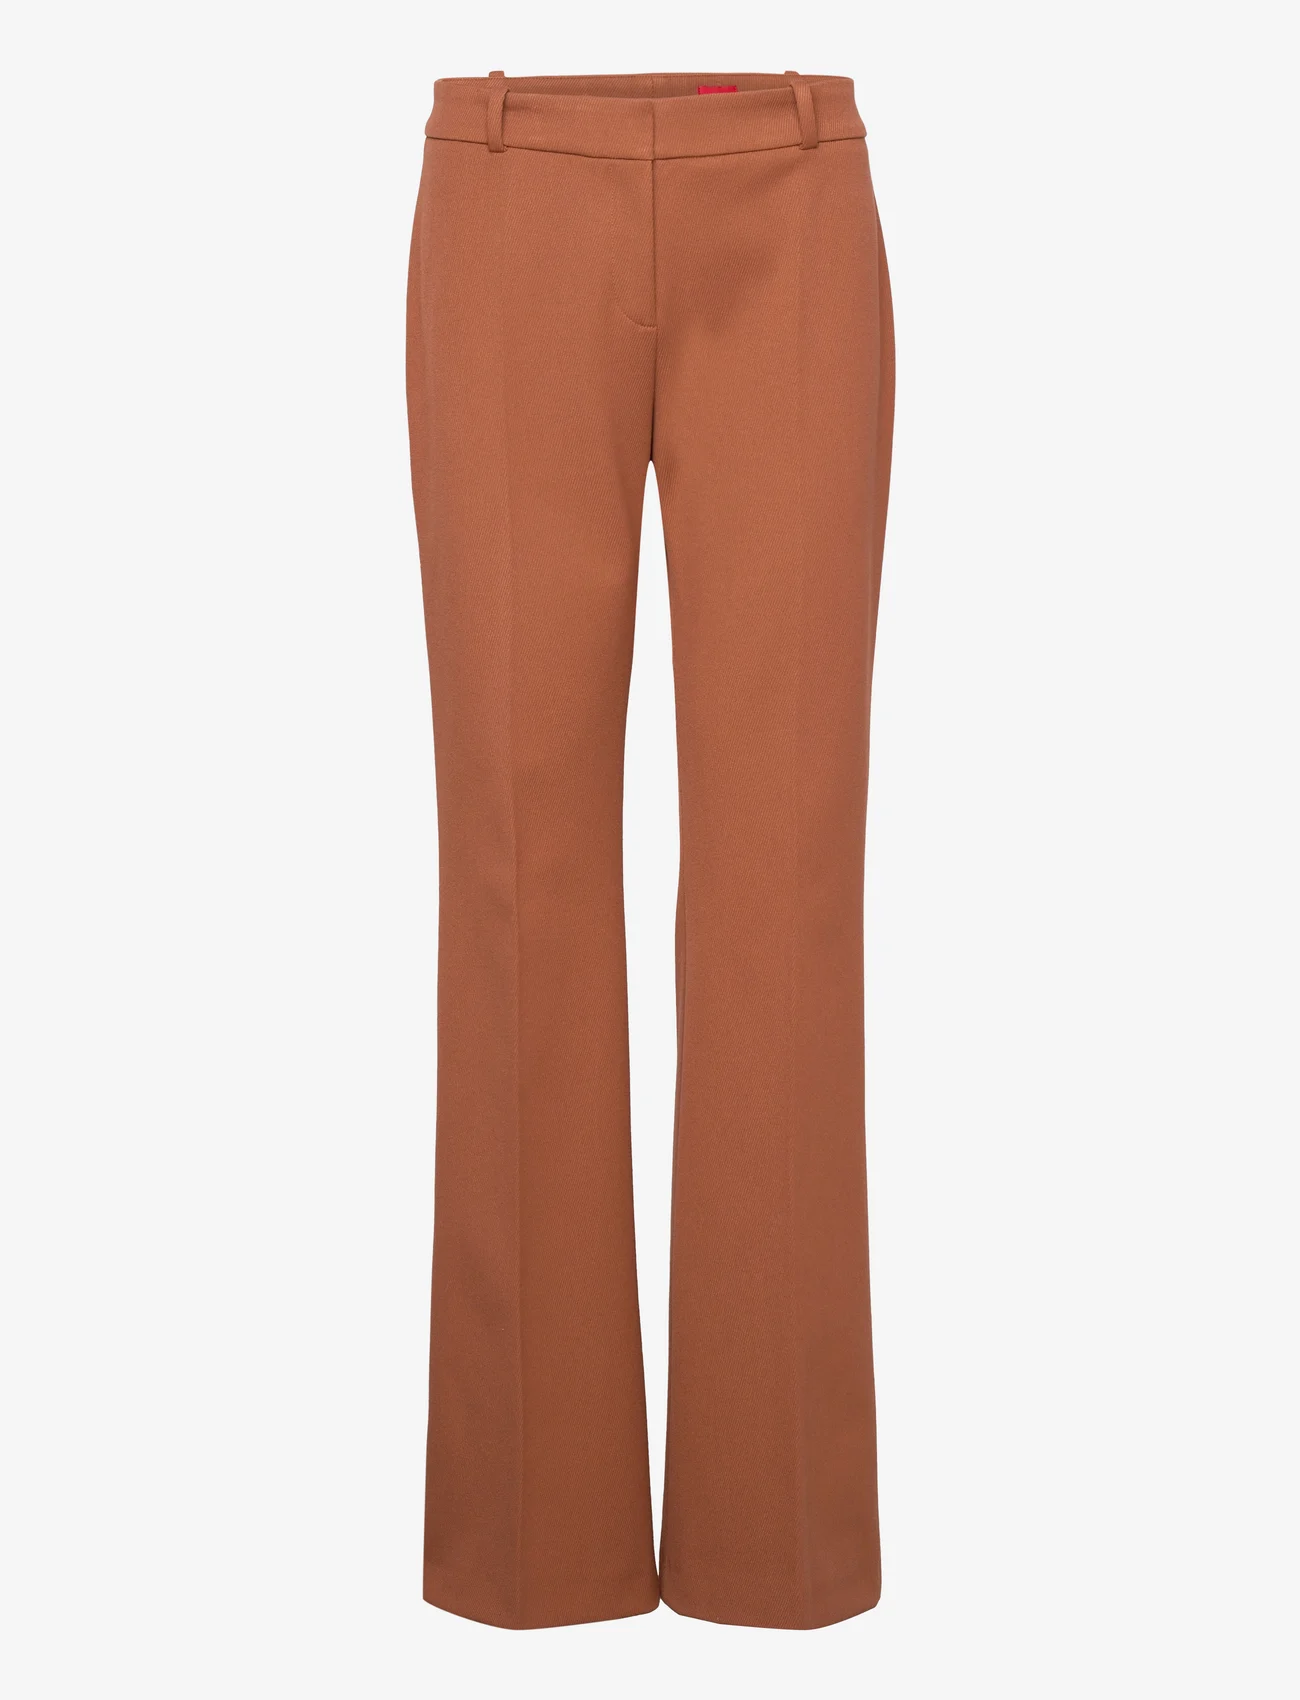 HUGO - Hilotinna - tailored trousers - open brown - 0